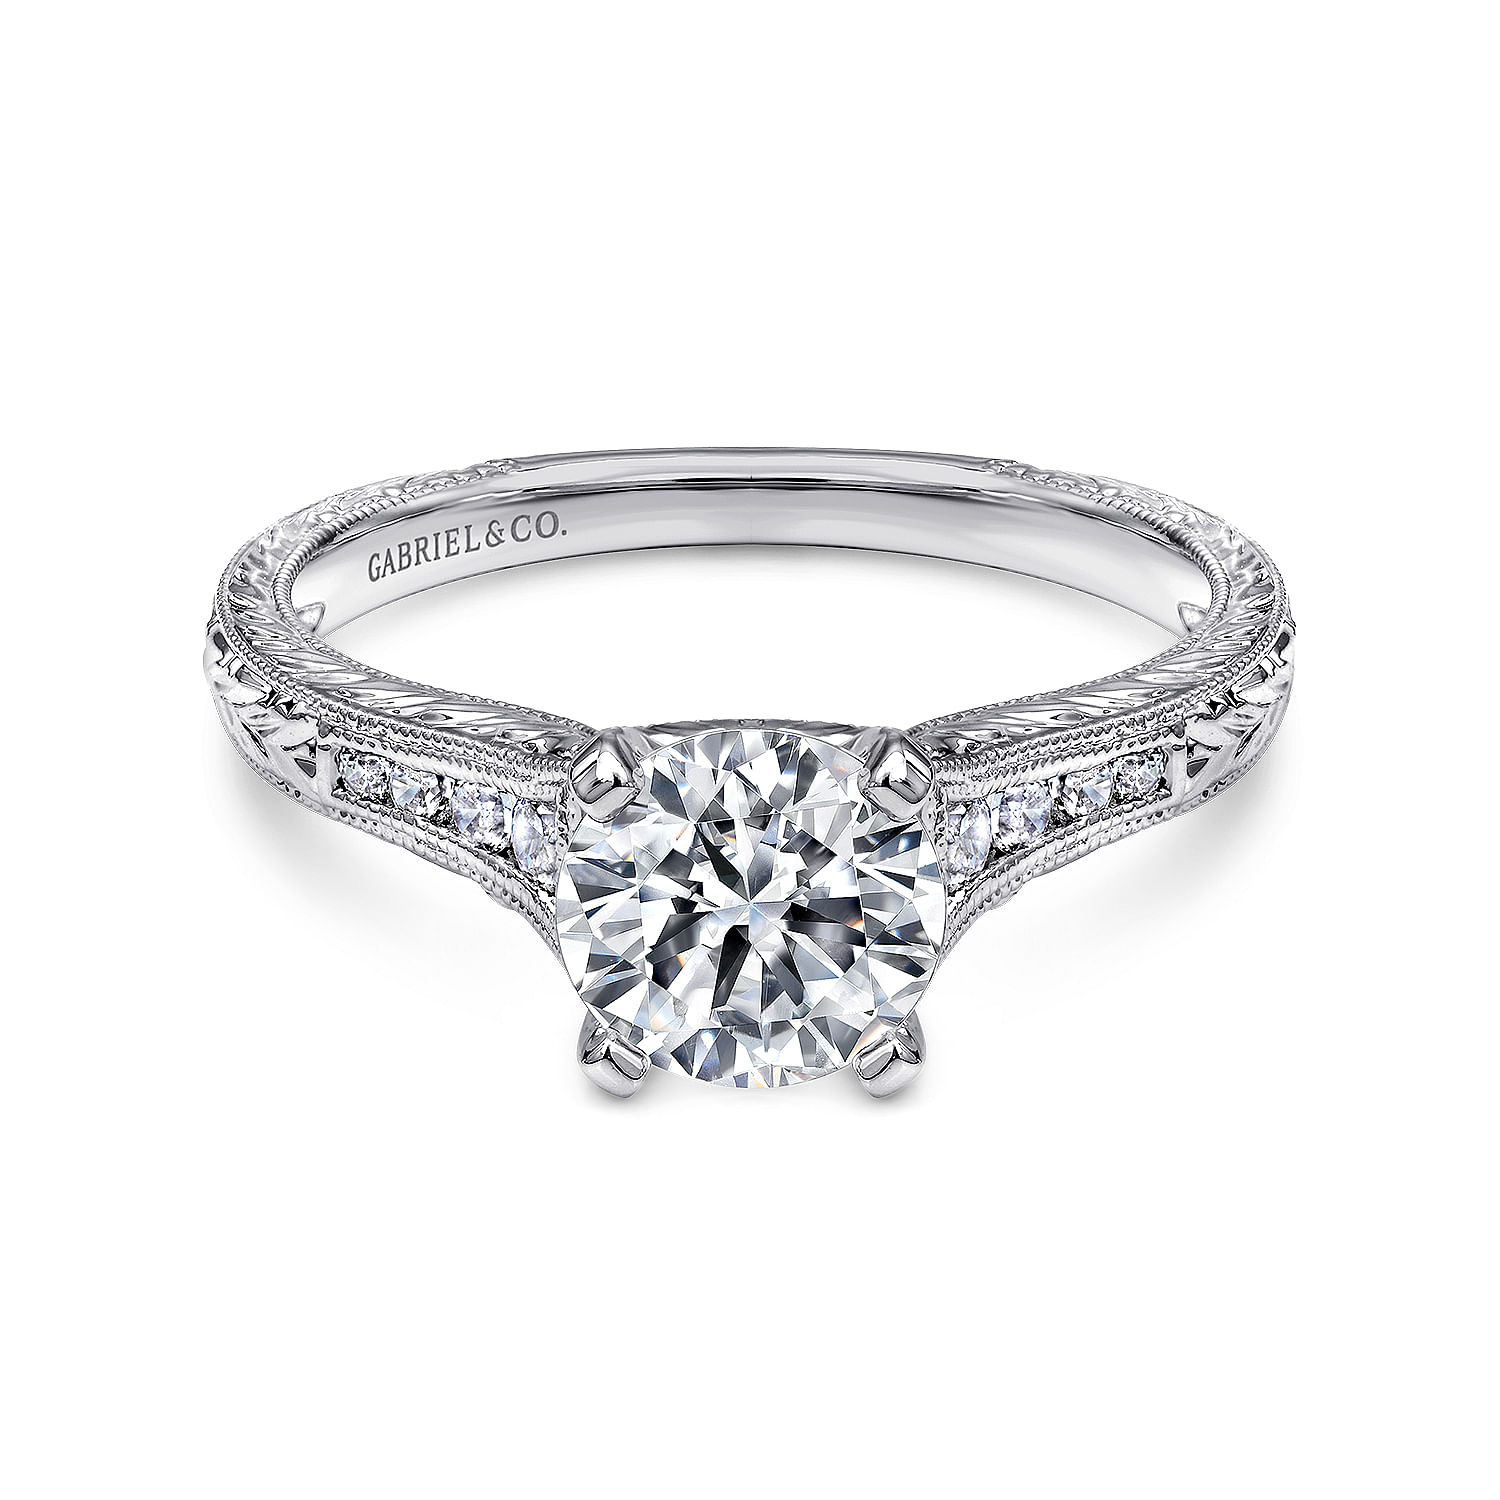 Audra---14K-White-Gold-Round-Diamond-Channel-Set-Engagement-Ring1